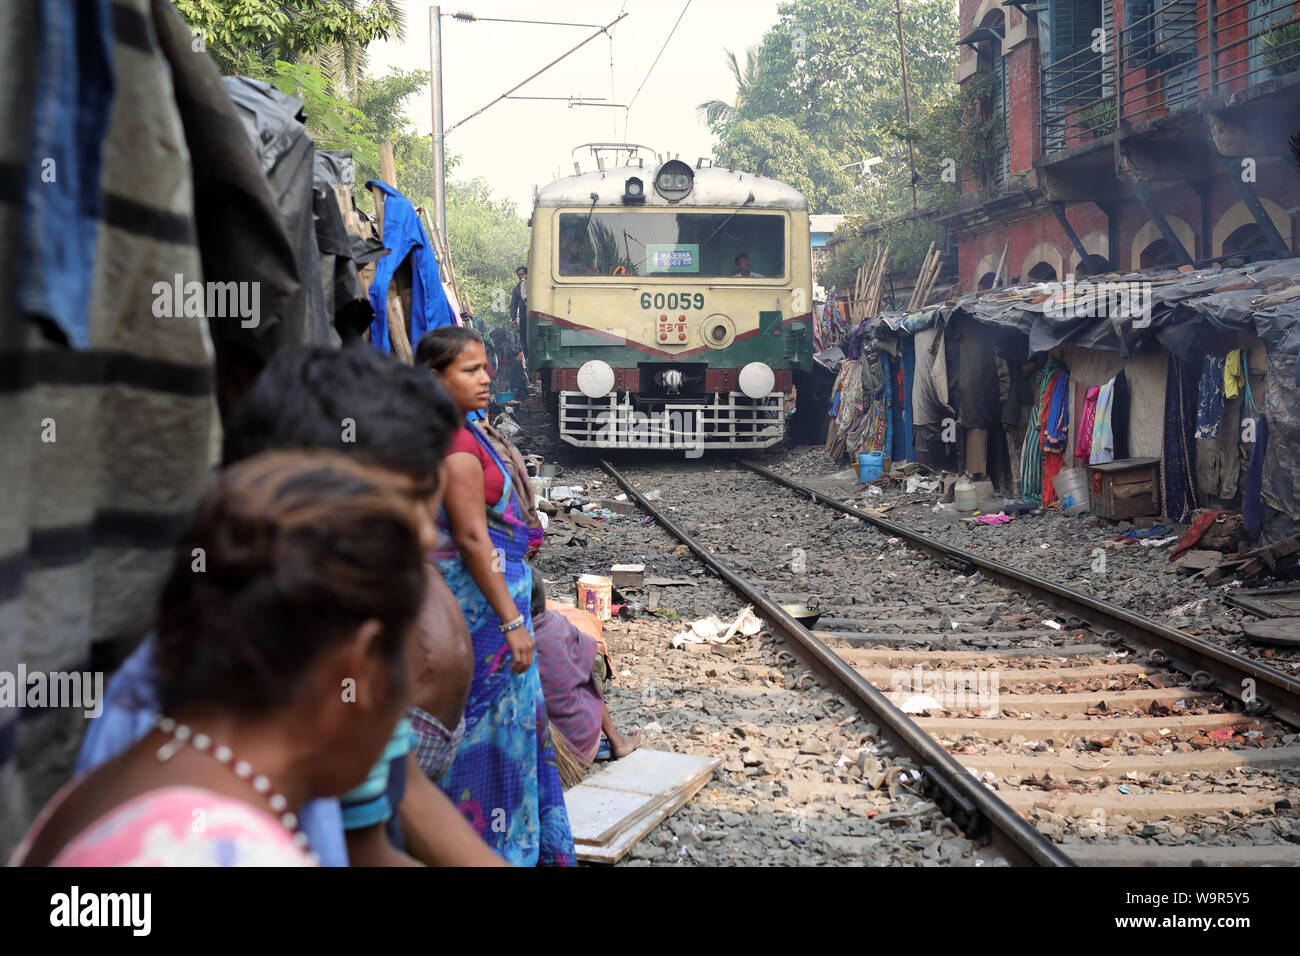 People watch the train in a slum in Kolkata, India Stock Photo